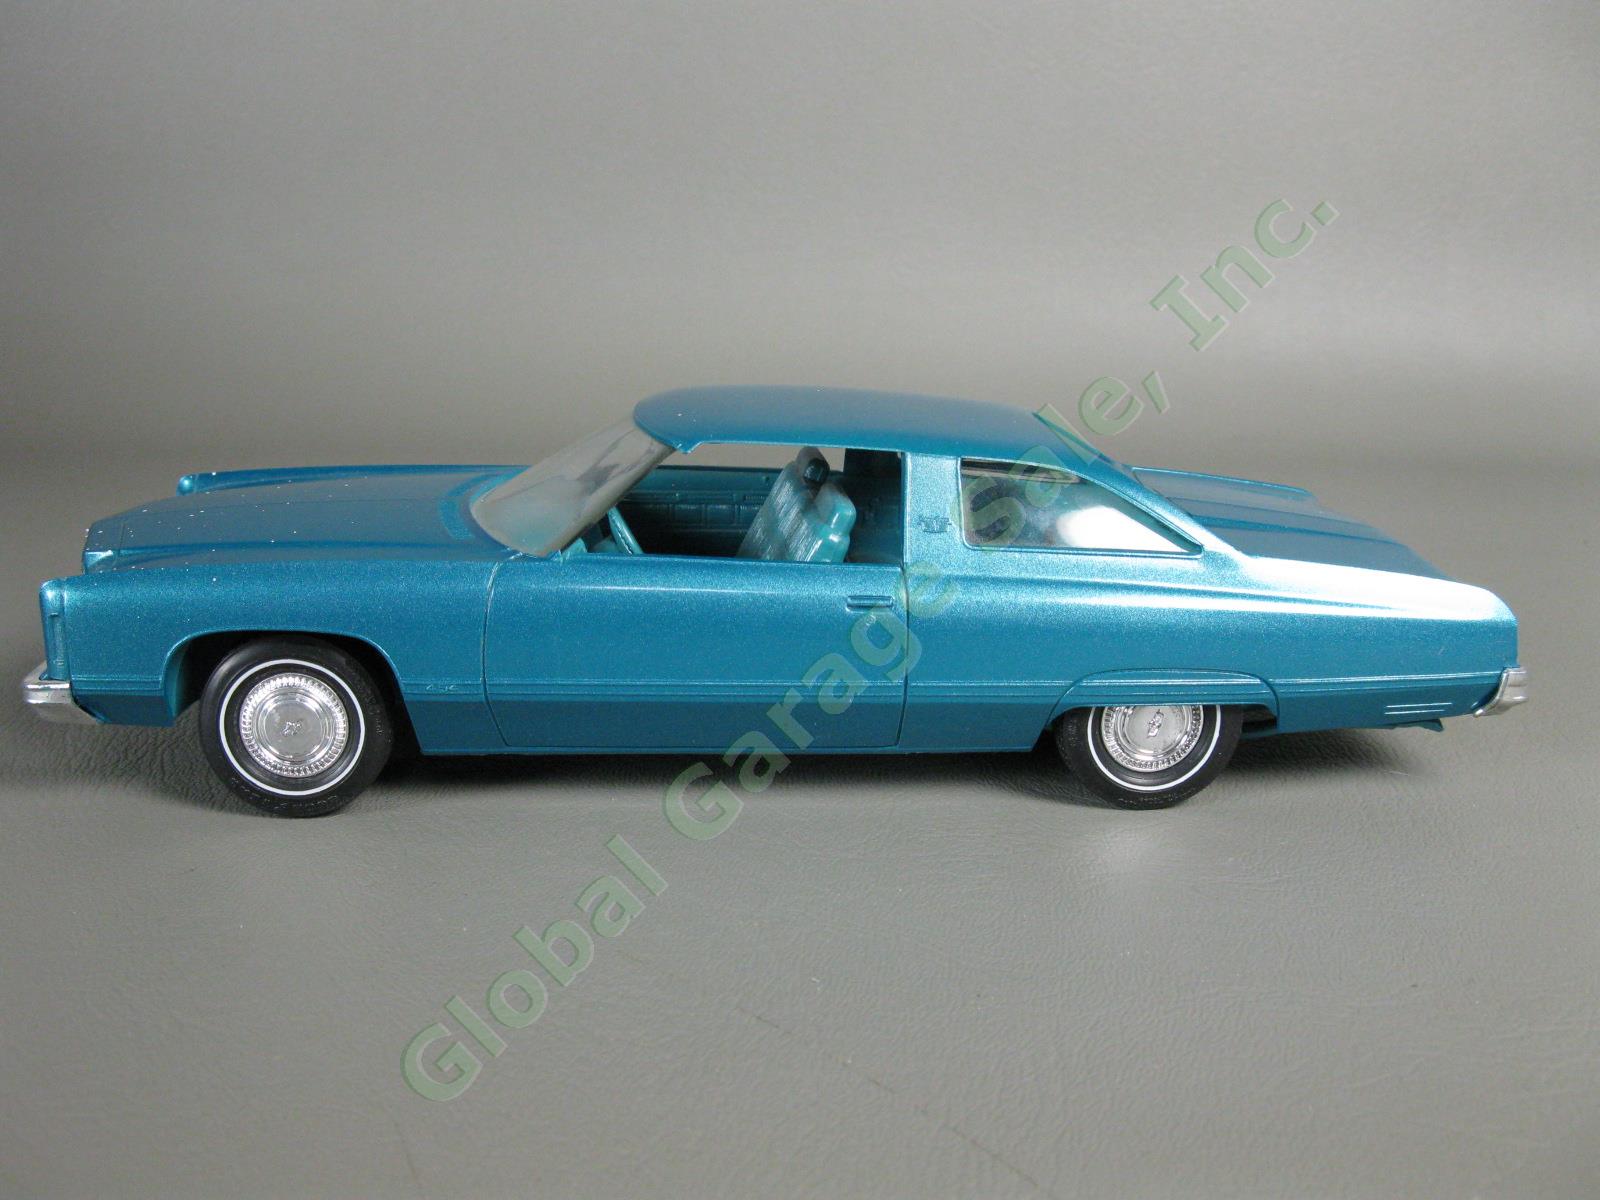 Original VTG 1974 Chevrolet Caprice Classic Blue Plastic Dealer Promo Model Car 1